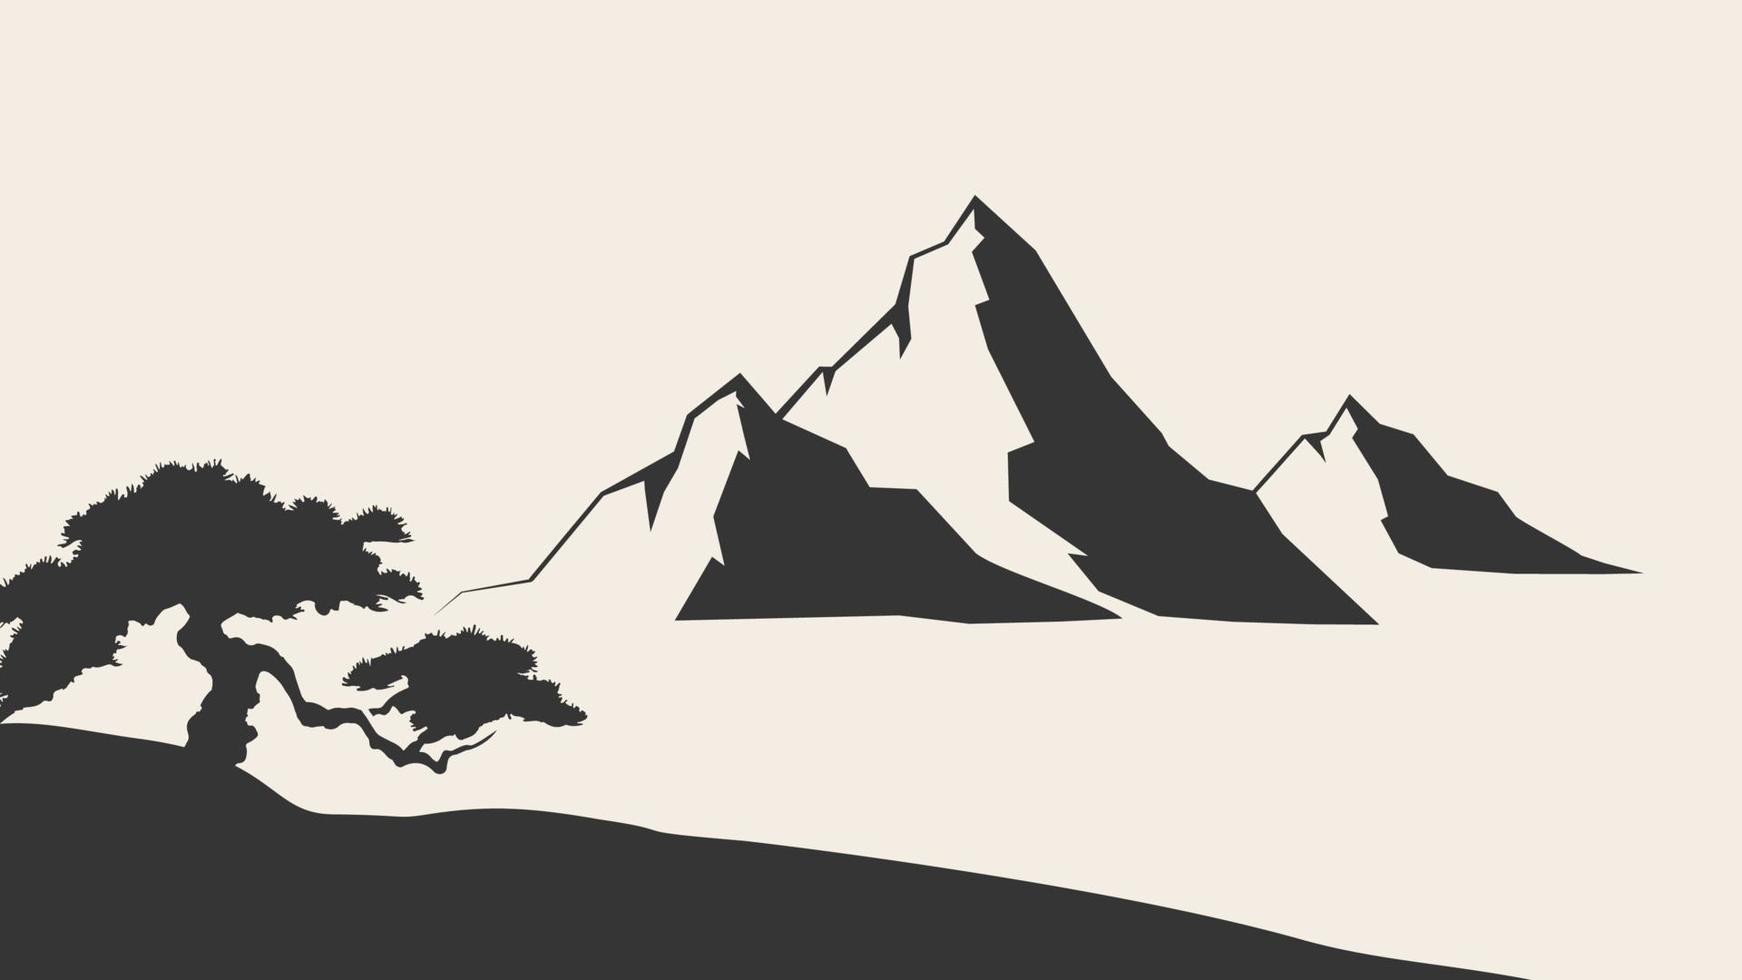 vector de montañas. ilustración de vector aislado de silueta de rango de montaña. silueta de las montañas